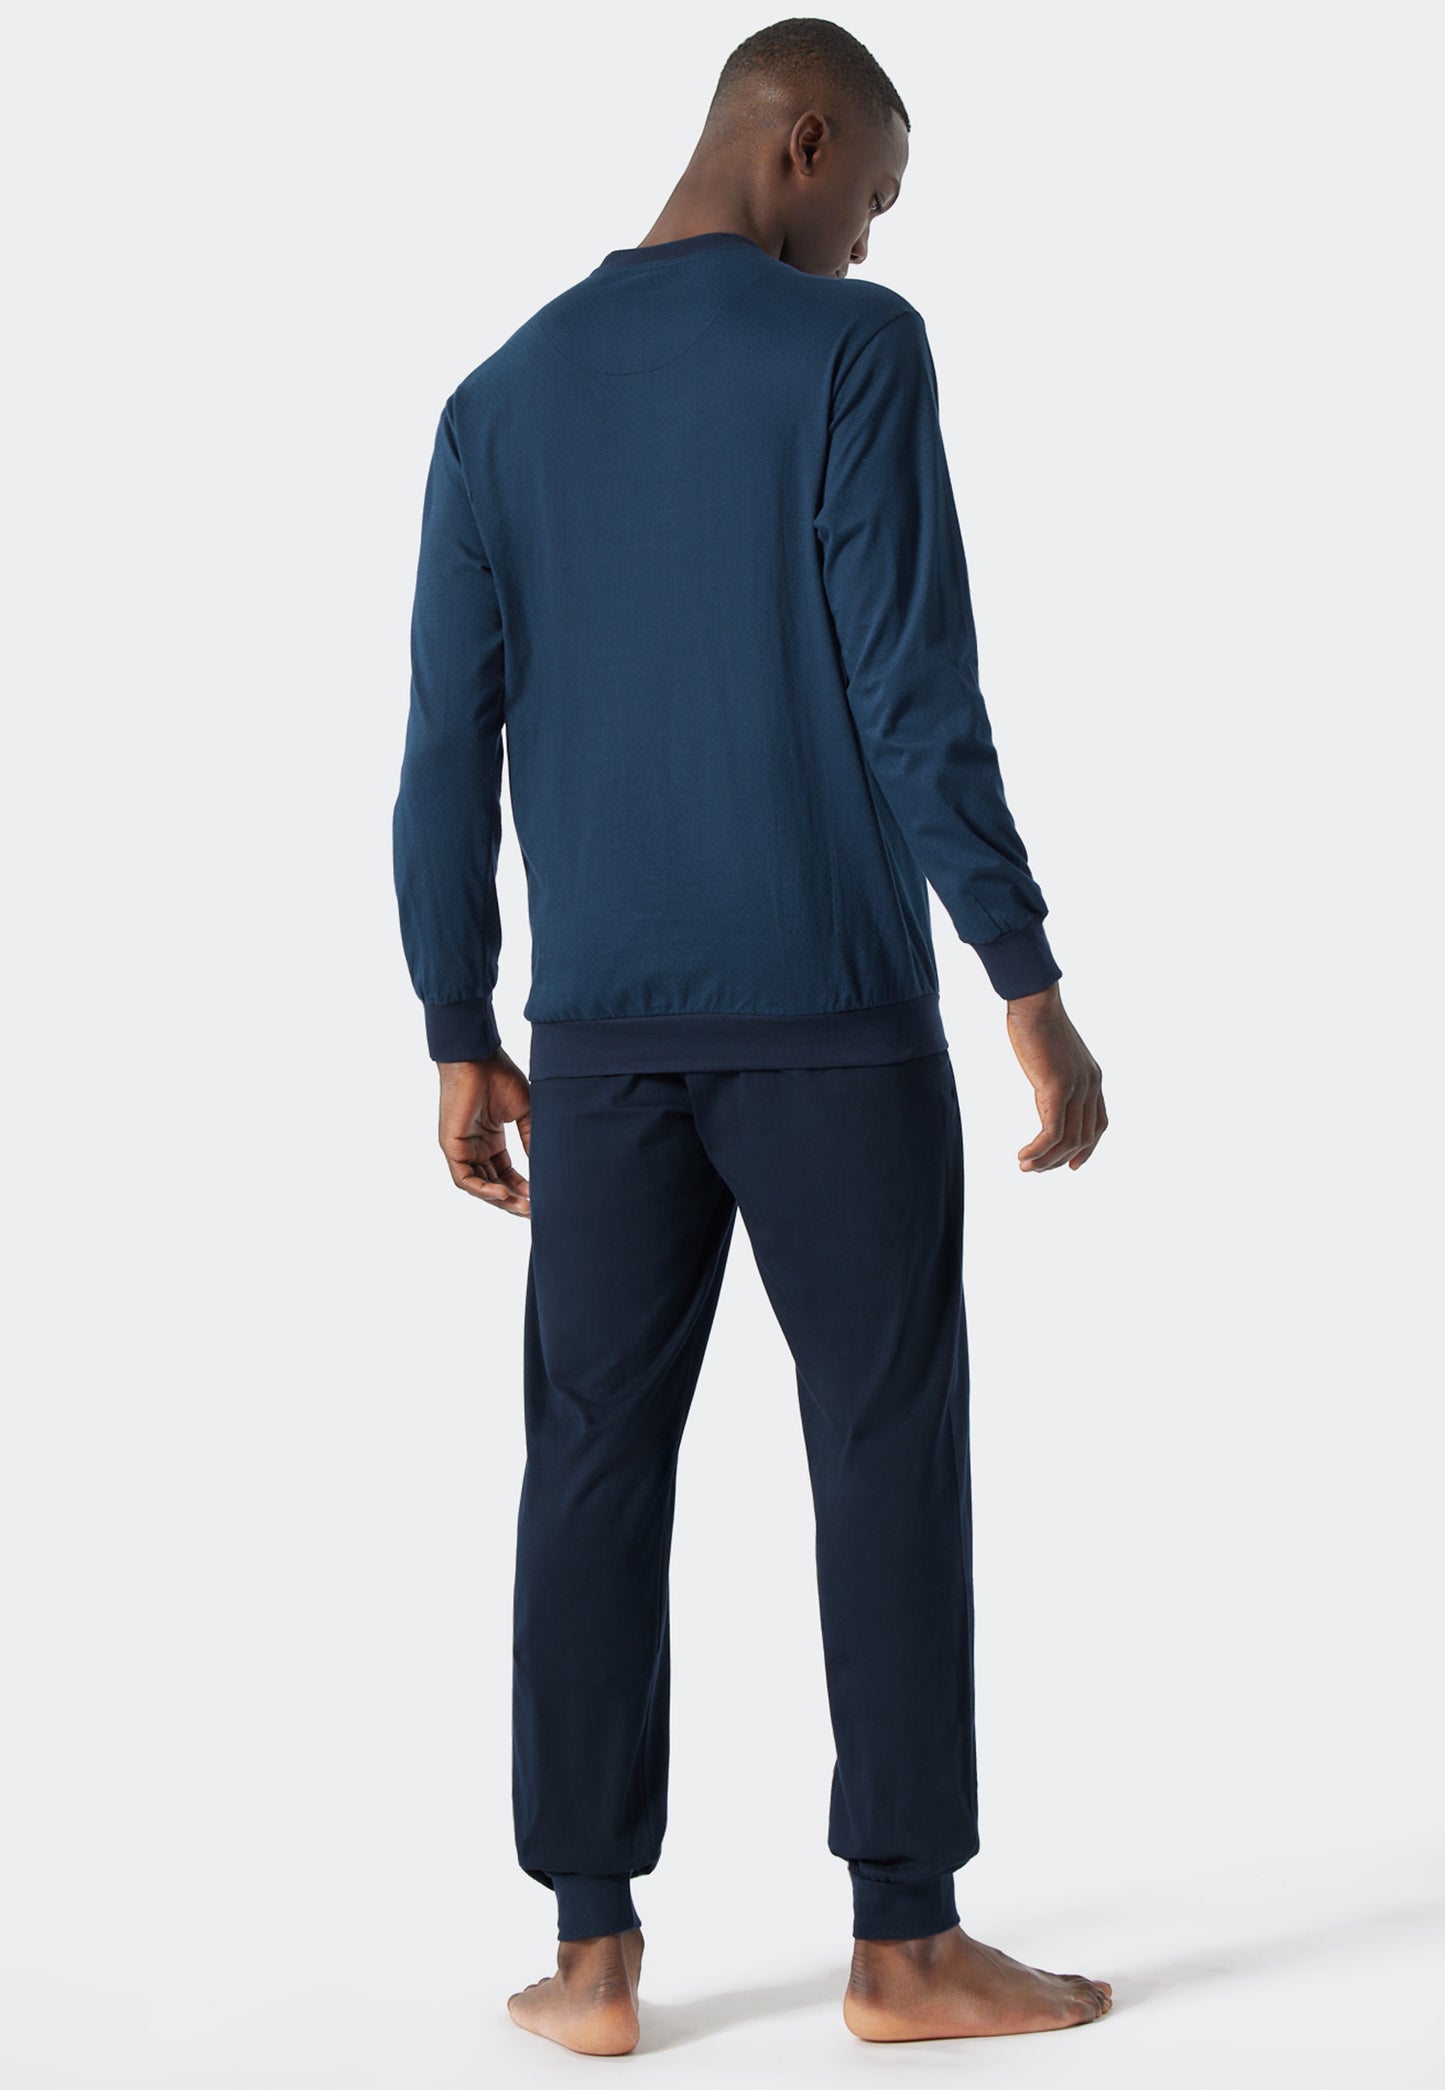 Pajamas long crew neck cuffs patterned royal/dark blue - Essentials Nightwear